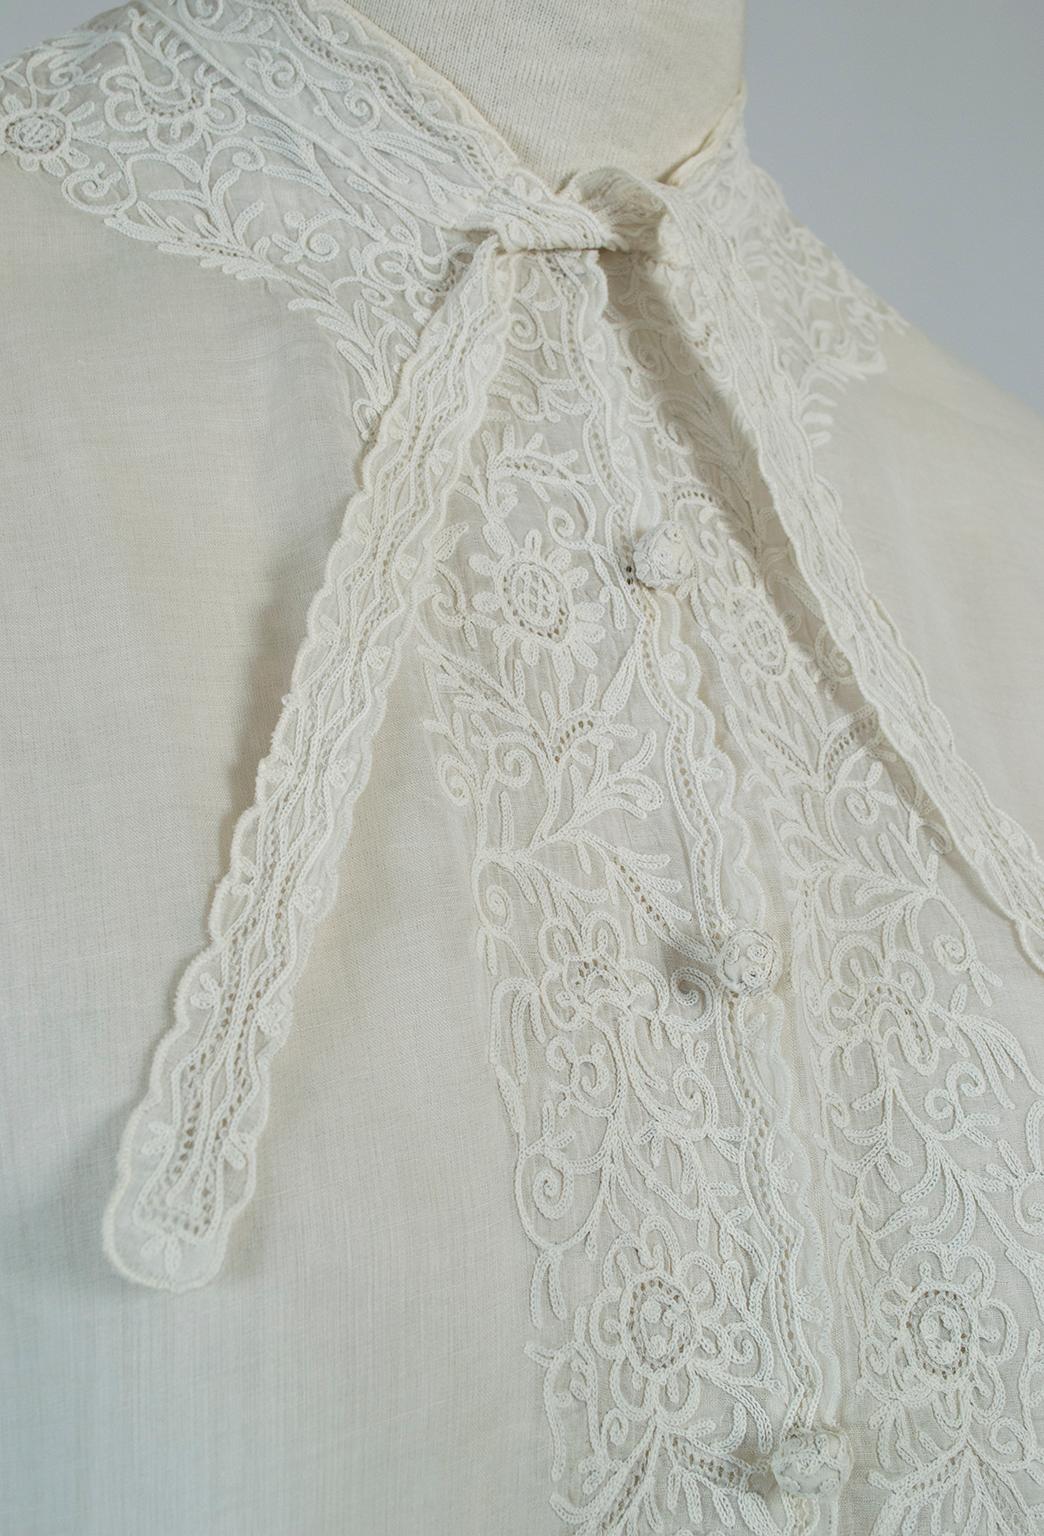 Gray Edwardian Sheer Ecru Tie Neck Crewel Work Neckcloth Shirtfront Dickey-S-M, 1910s For Sale